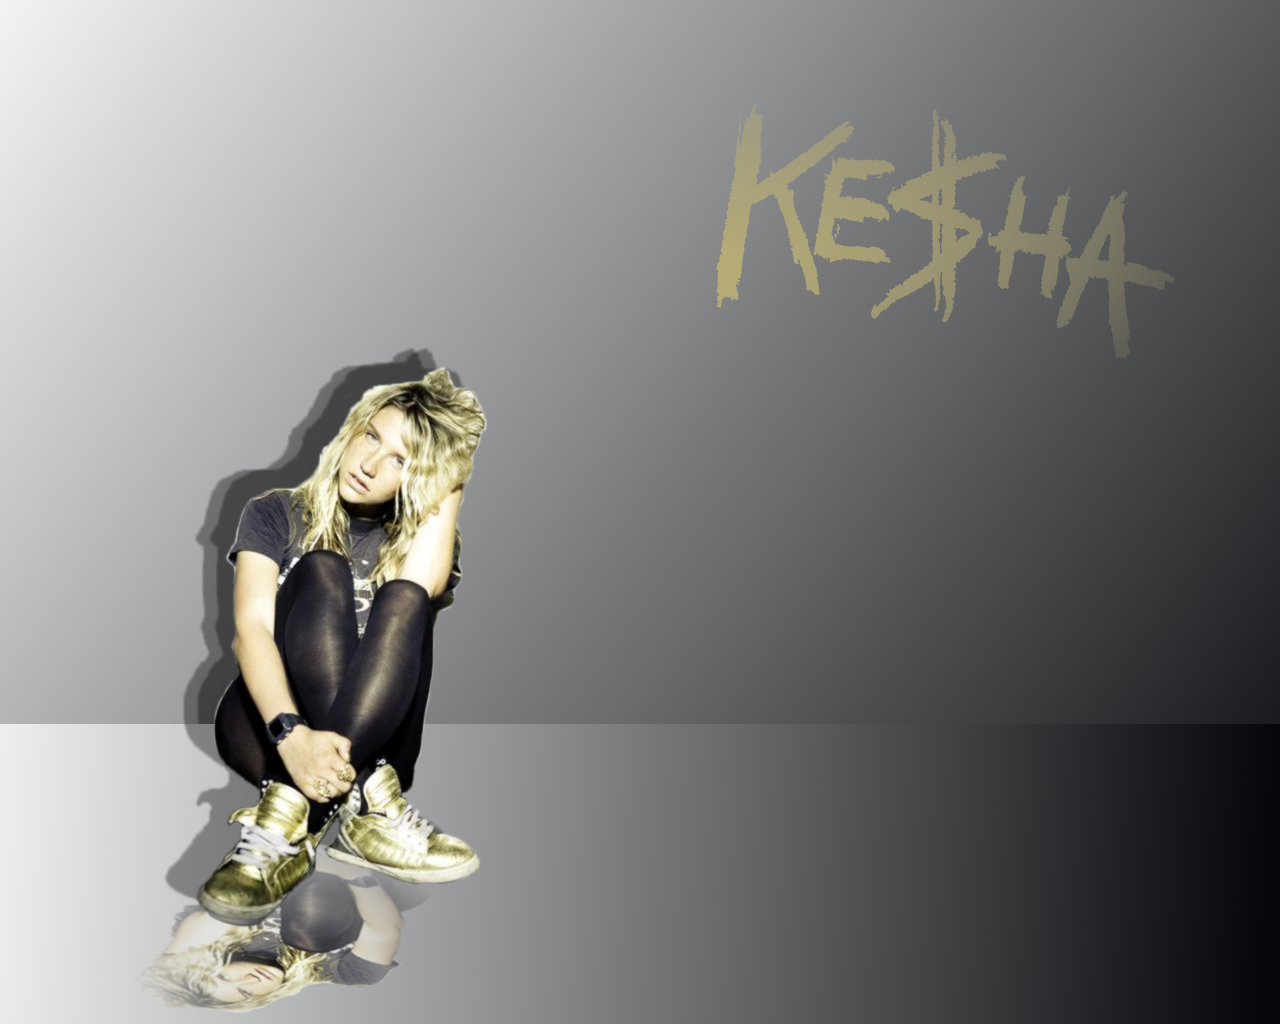 Beauty Kesha Wallpaper Full HD Pictures